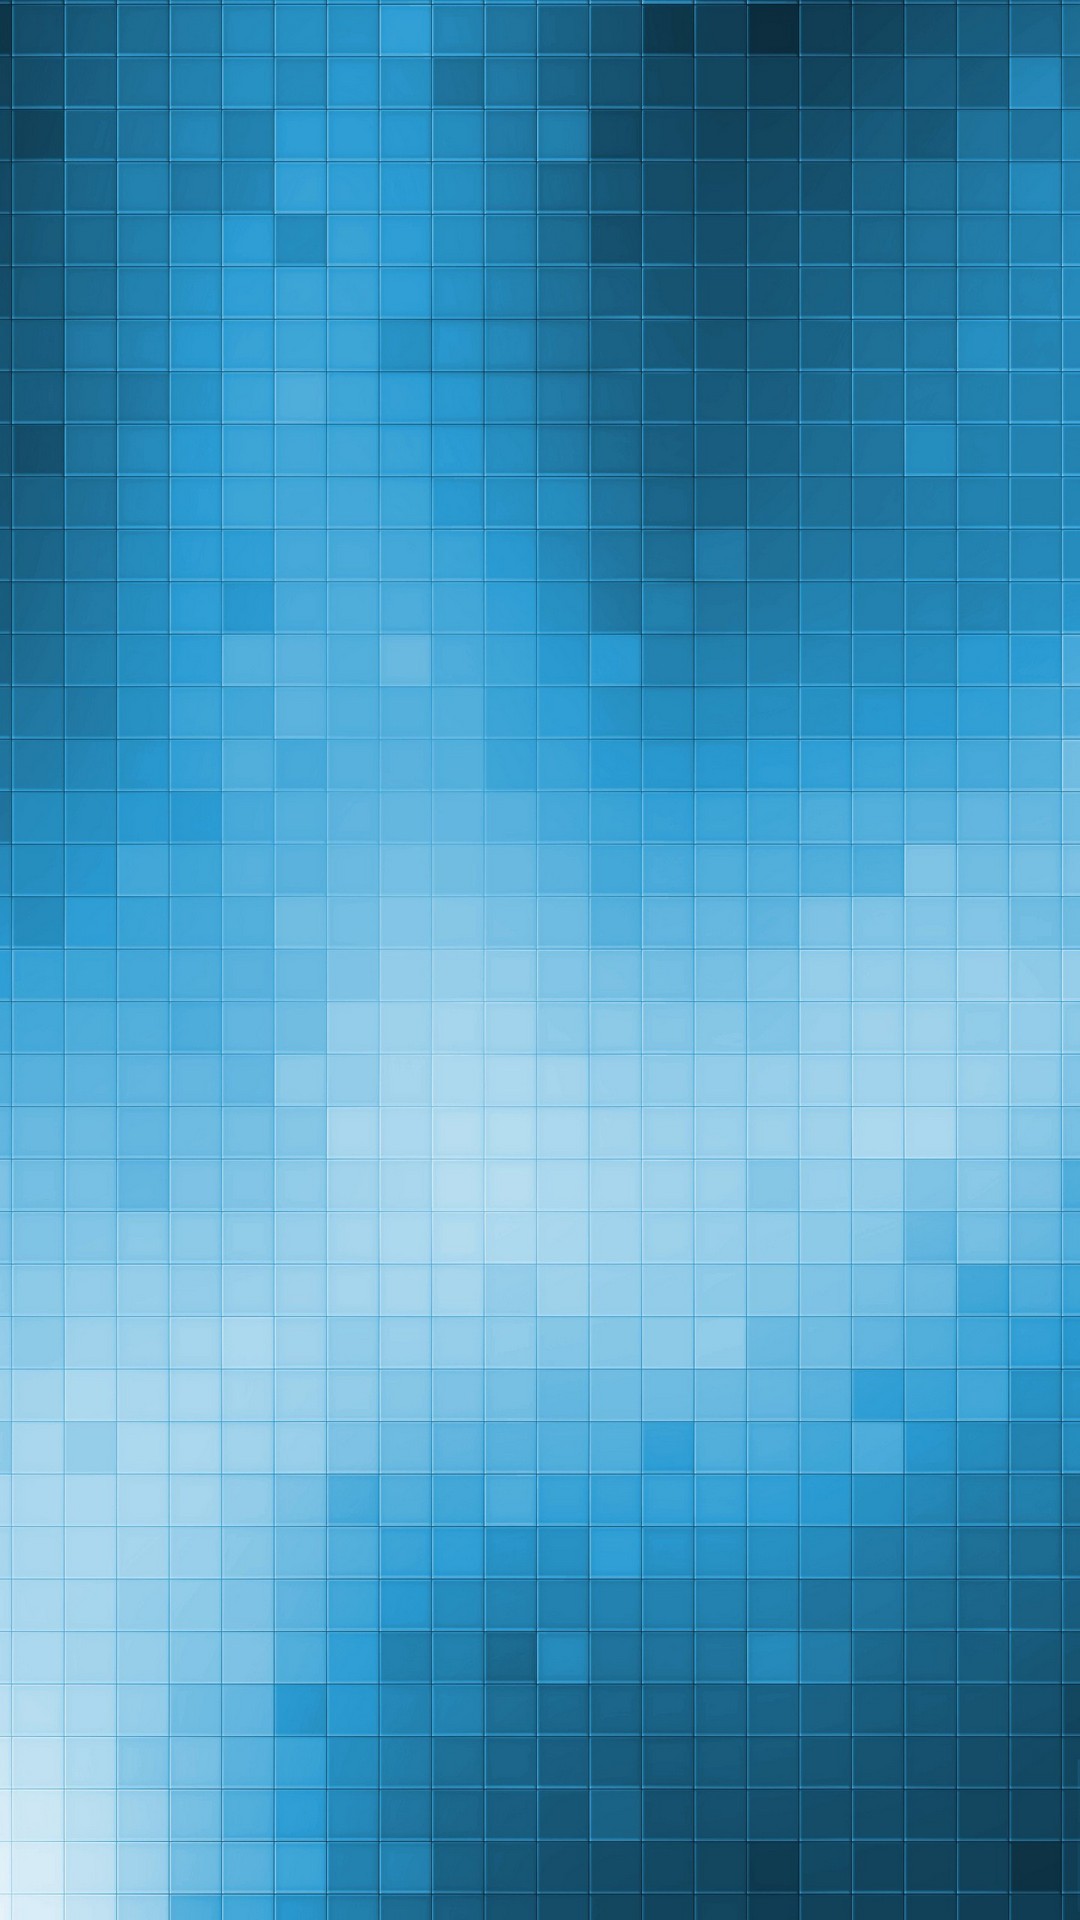 Blue iPhone Wallpaper Retina resolution 1080x1920